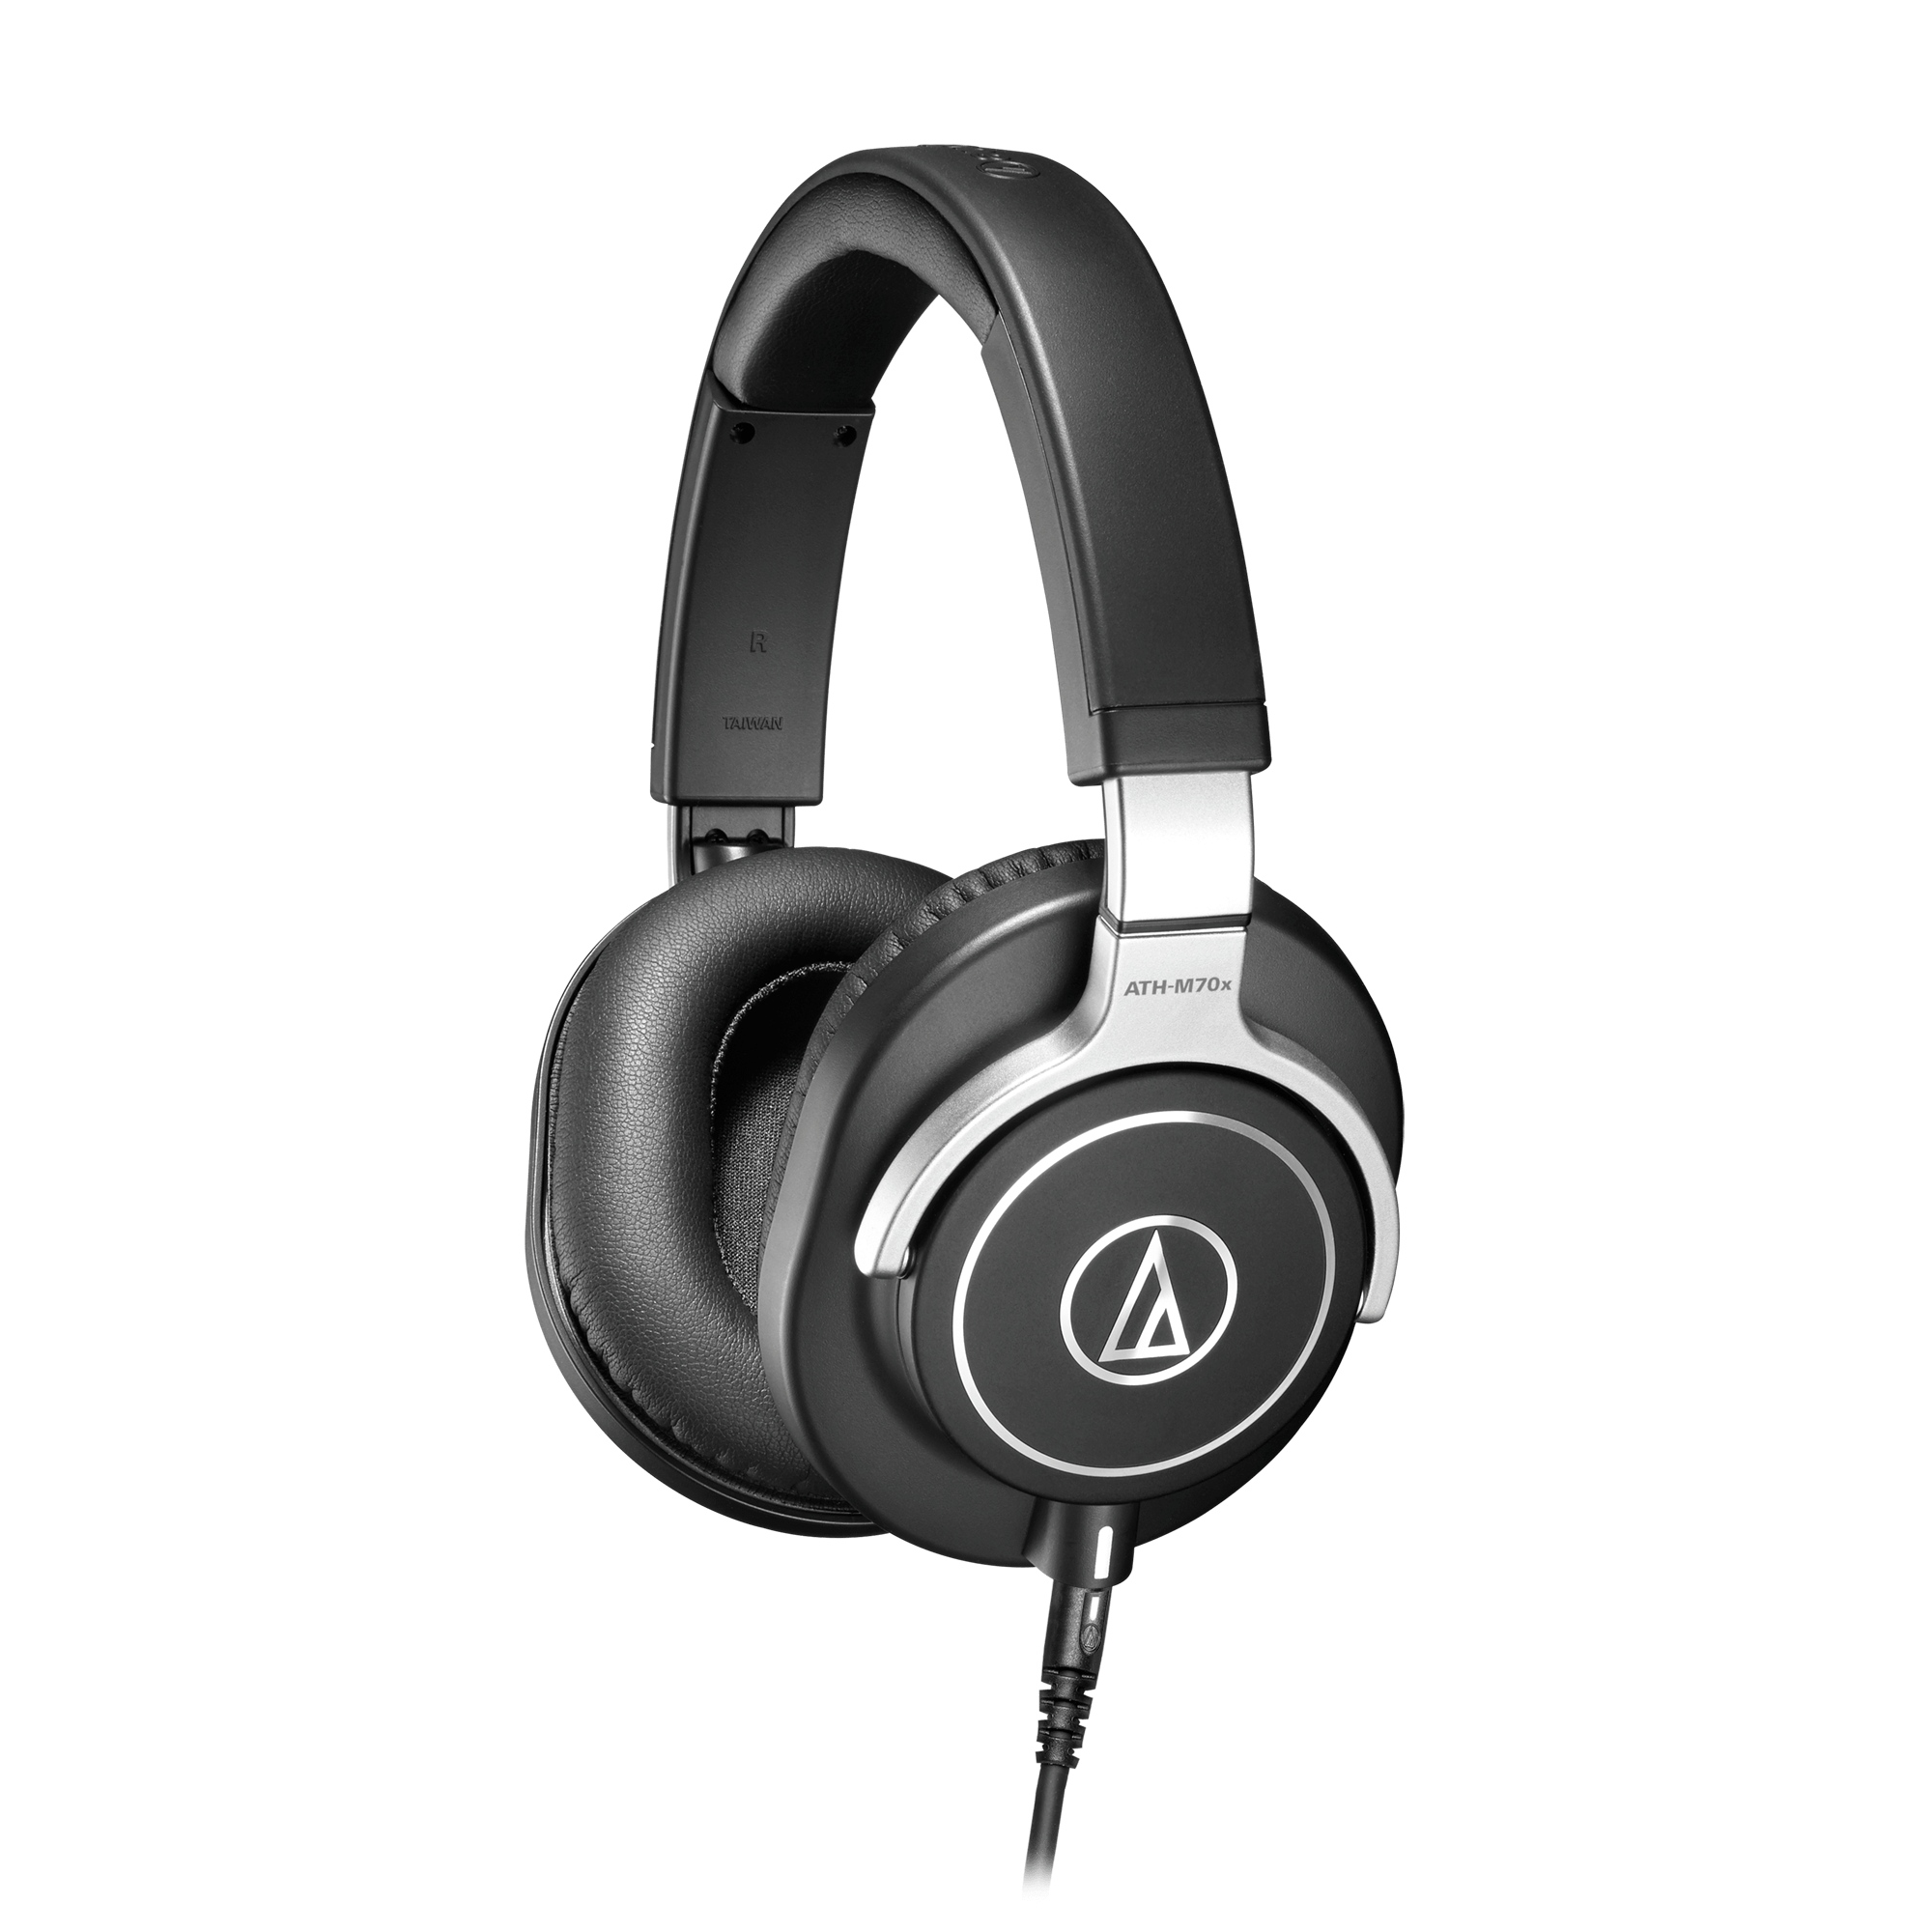 Picture of Audio-Technica ATH-M70x Pro Monitor Headphones.